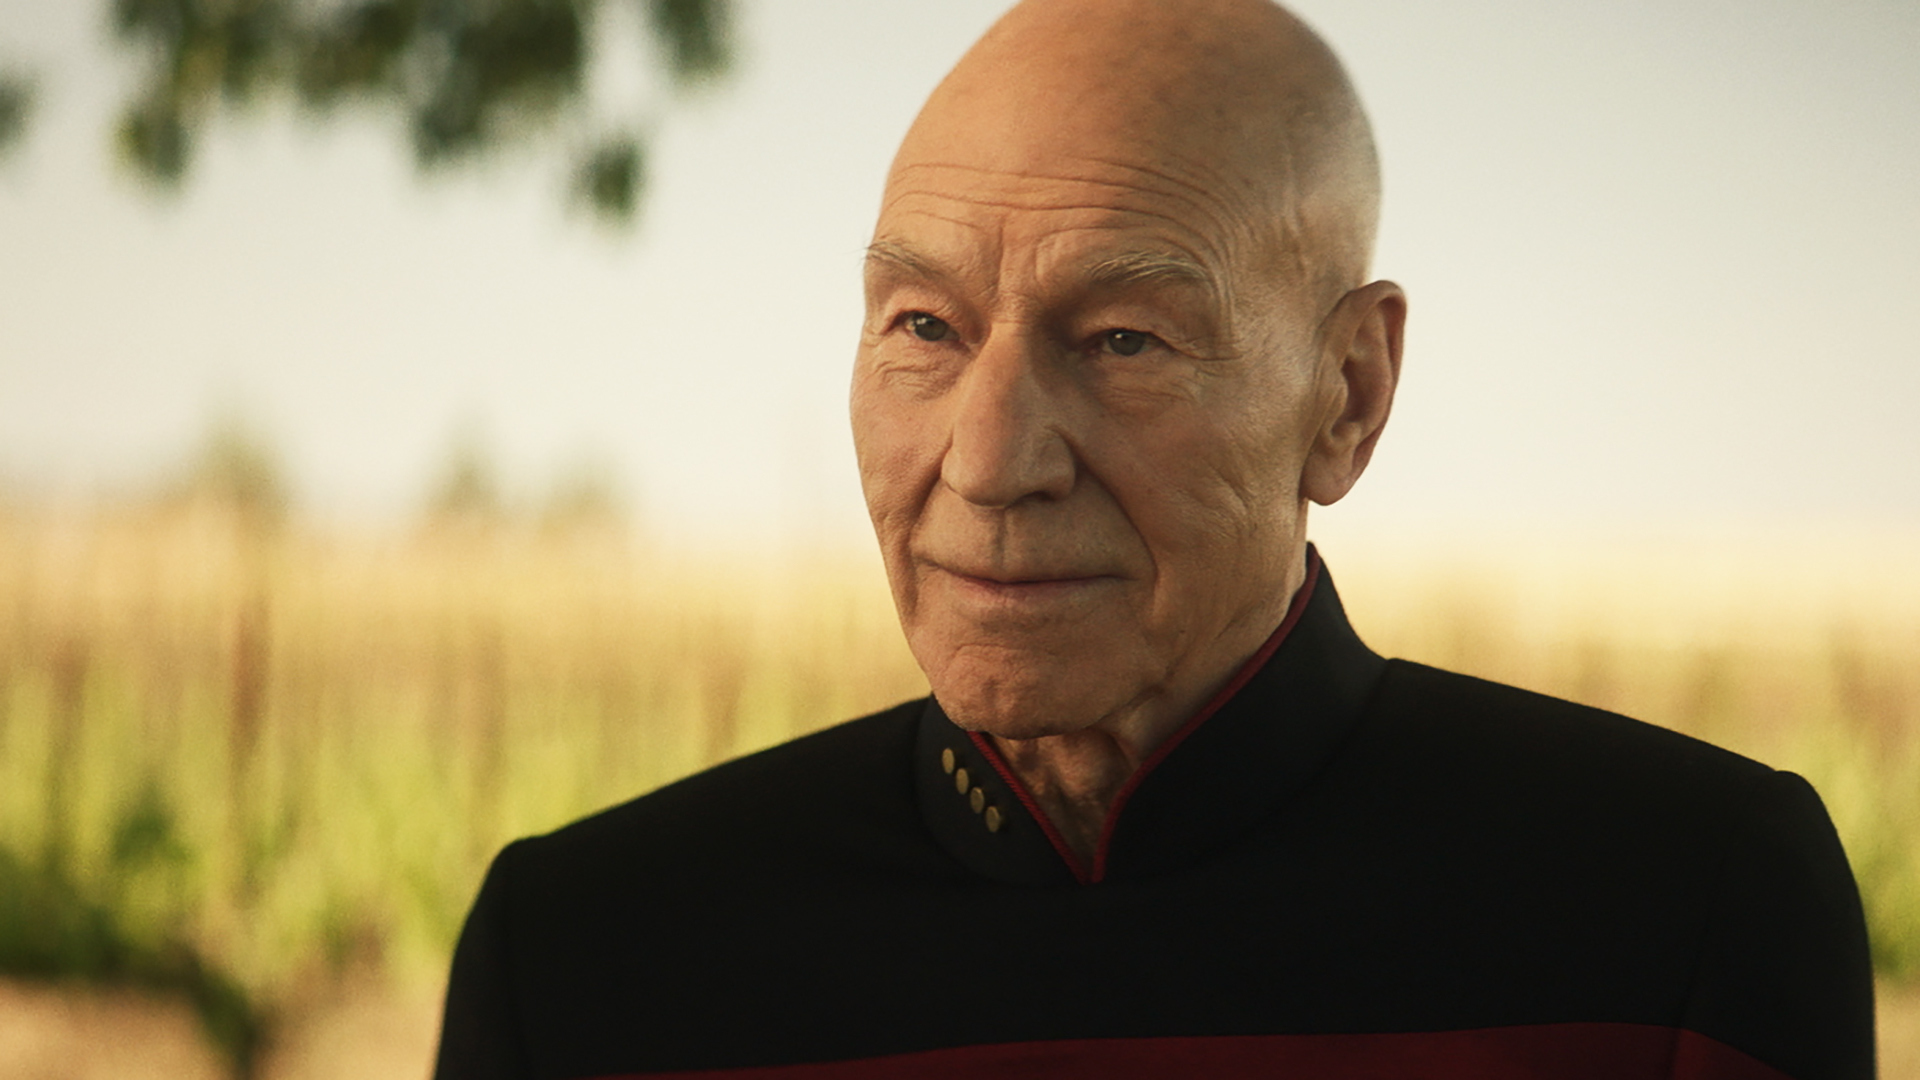 How many episodes in season 1 of star trek picard Watch Star Trek Picard Season 1 Episode 1 Remembrance Full Show On Paramount Plus